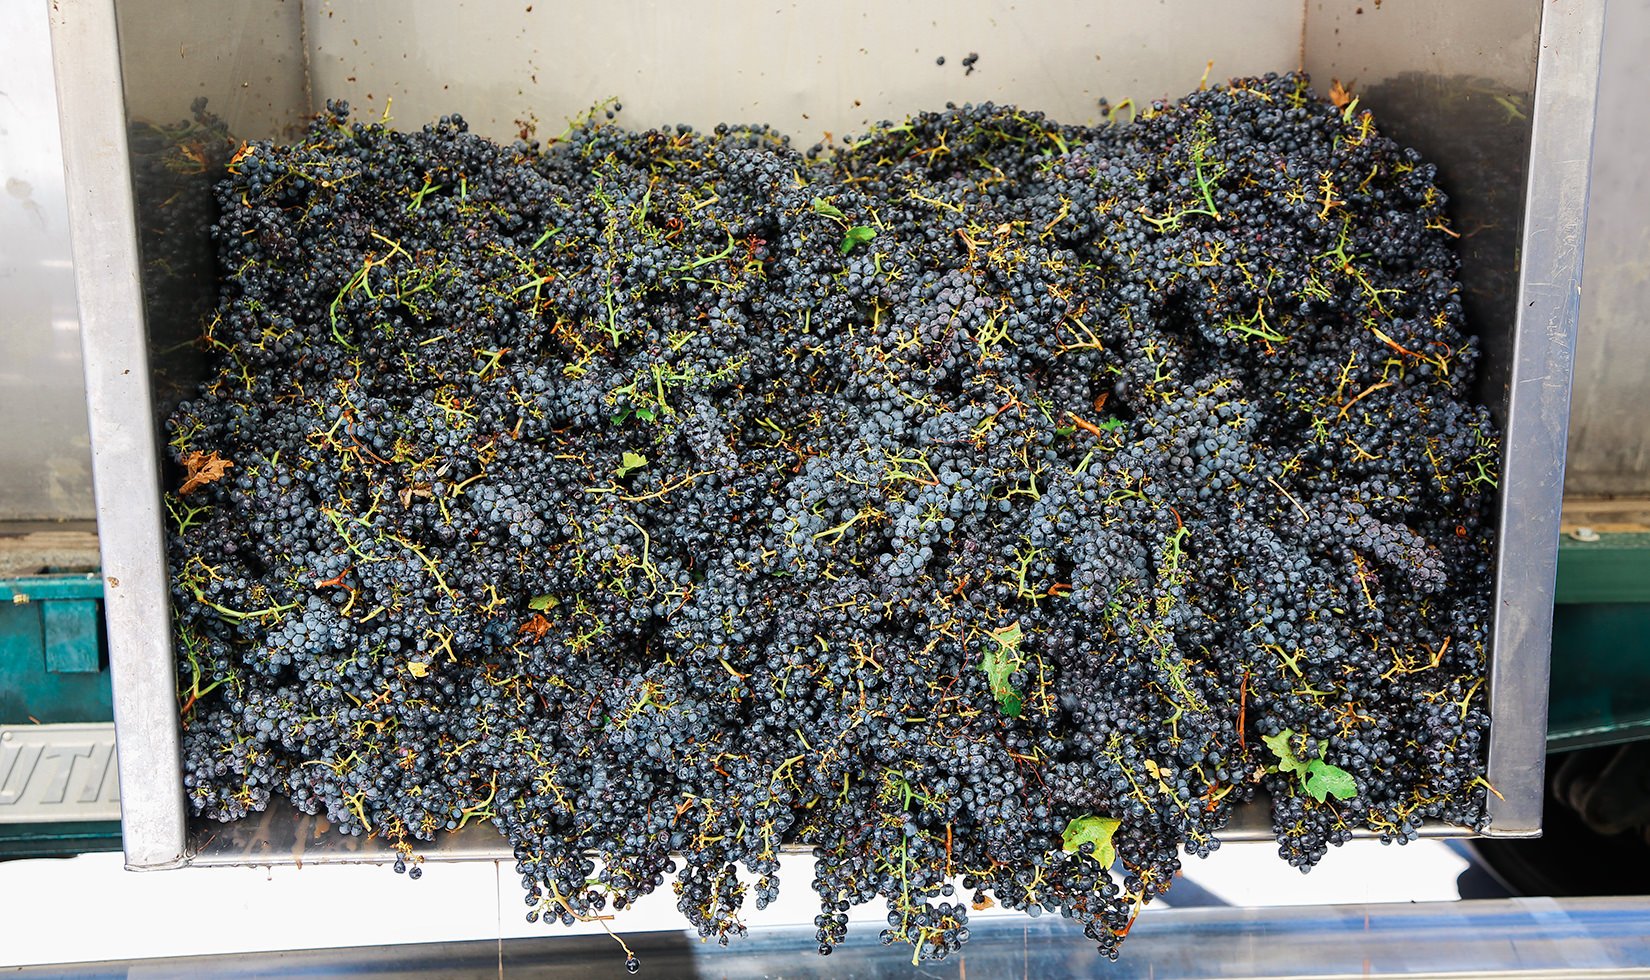 Jordan-Winery-Sonoma-County-Cabernet-Grapes-Harvest-2015